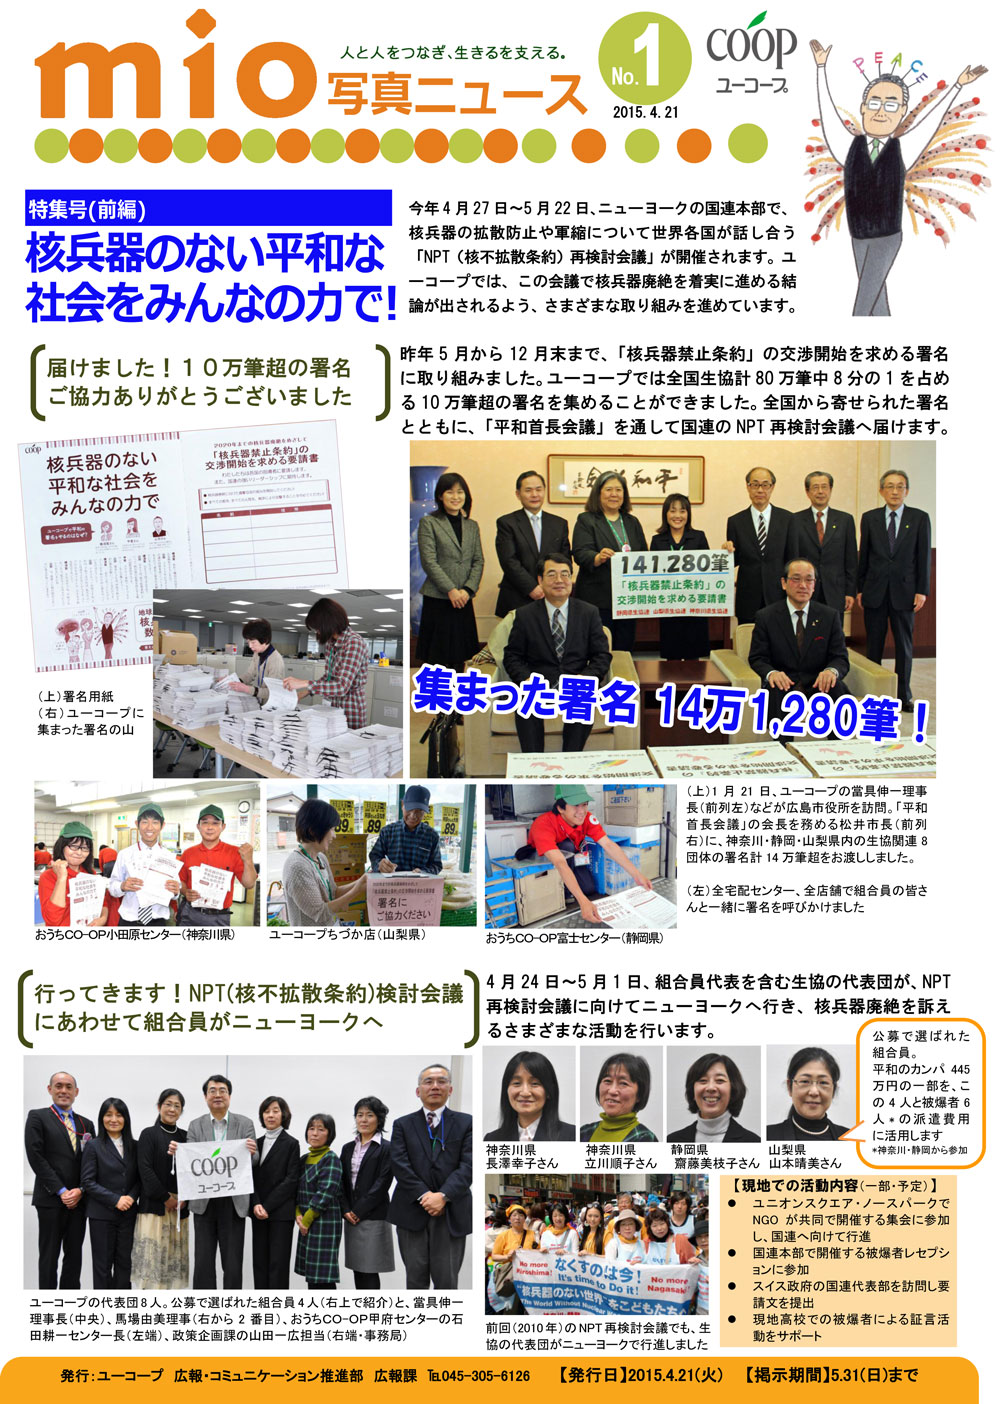 http://www.ucoop.or.jp/hiroba/report/files/150421miophotonews.jpg